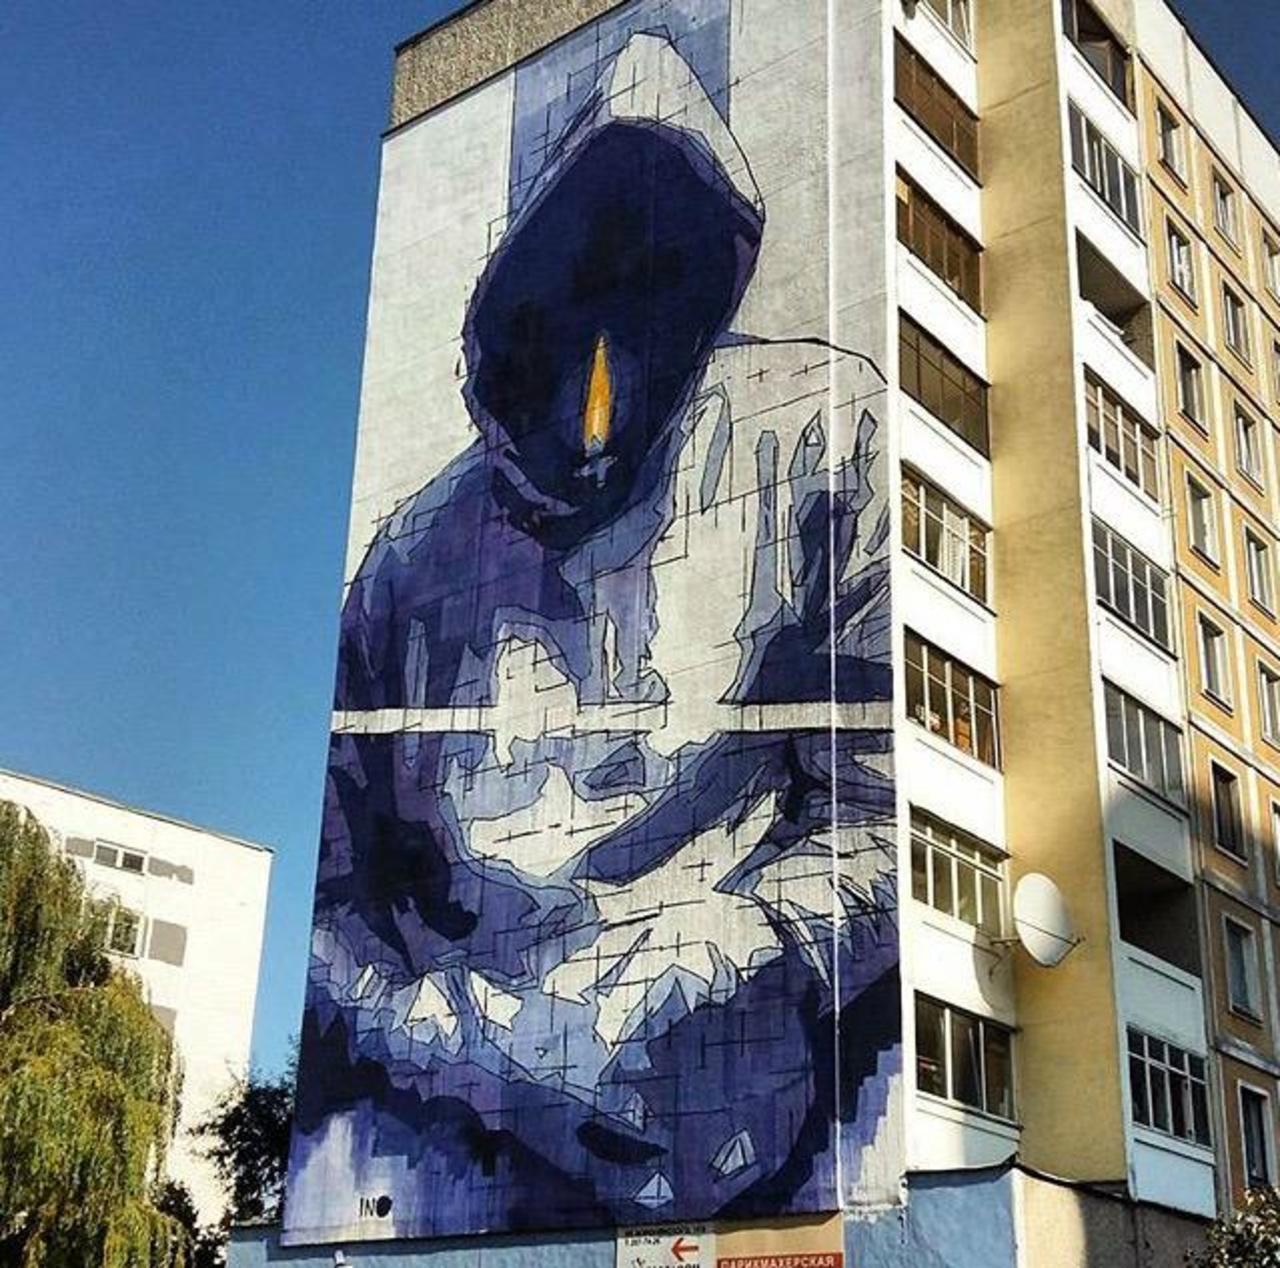 RT @tusfo: 'Man With No Name' 
New Street Art by iNO in Minsk, Belarus 

#art #graffiti #mural #streetart http://t.co/AIAp6fyqH5